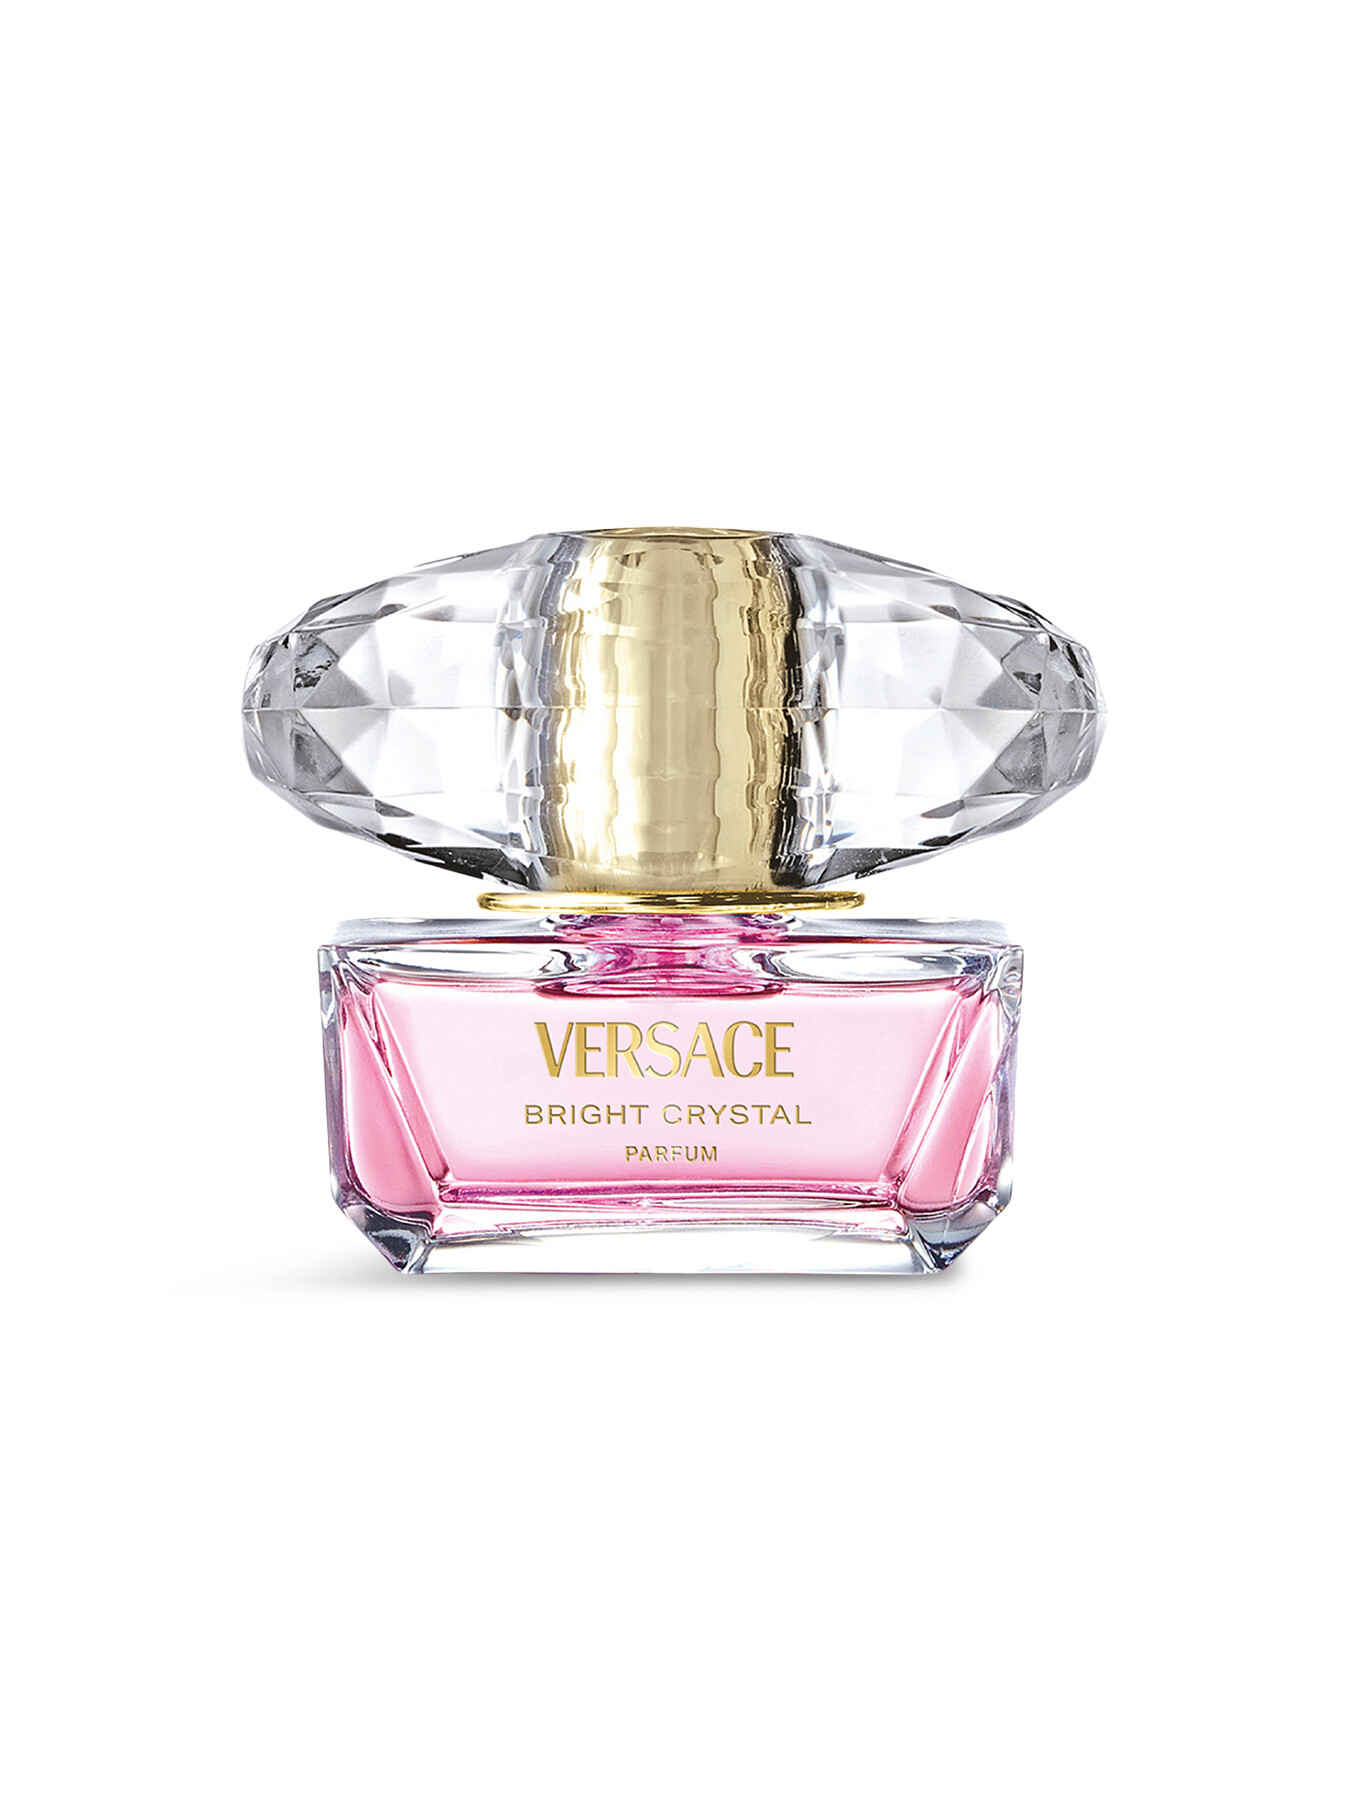 Versace Bright Crystal Parfum 50ml In White